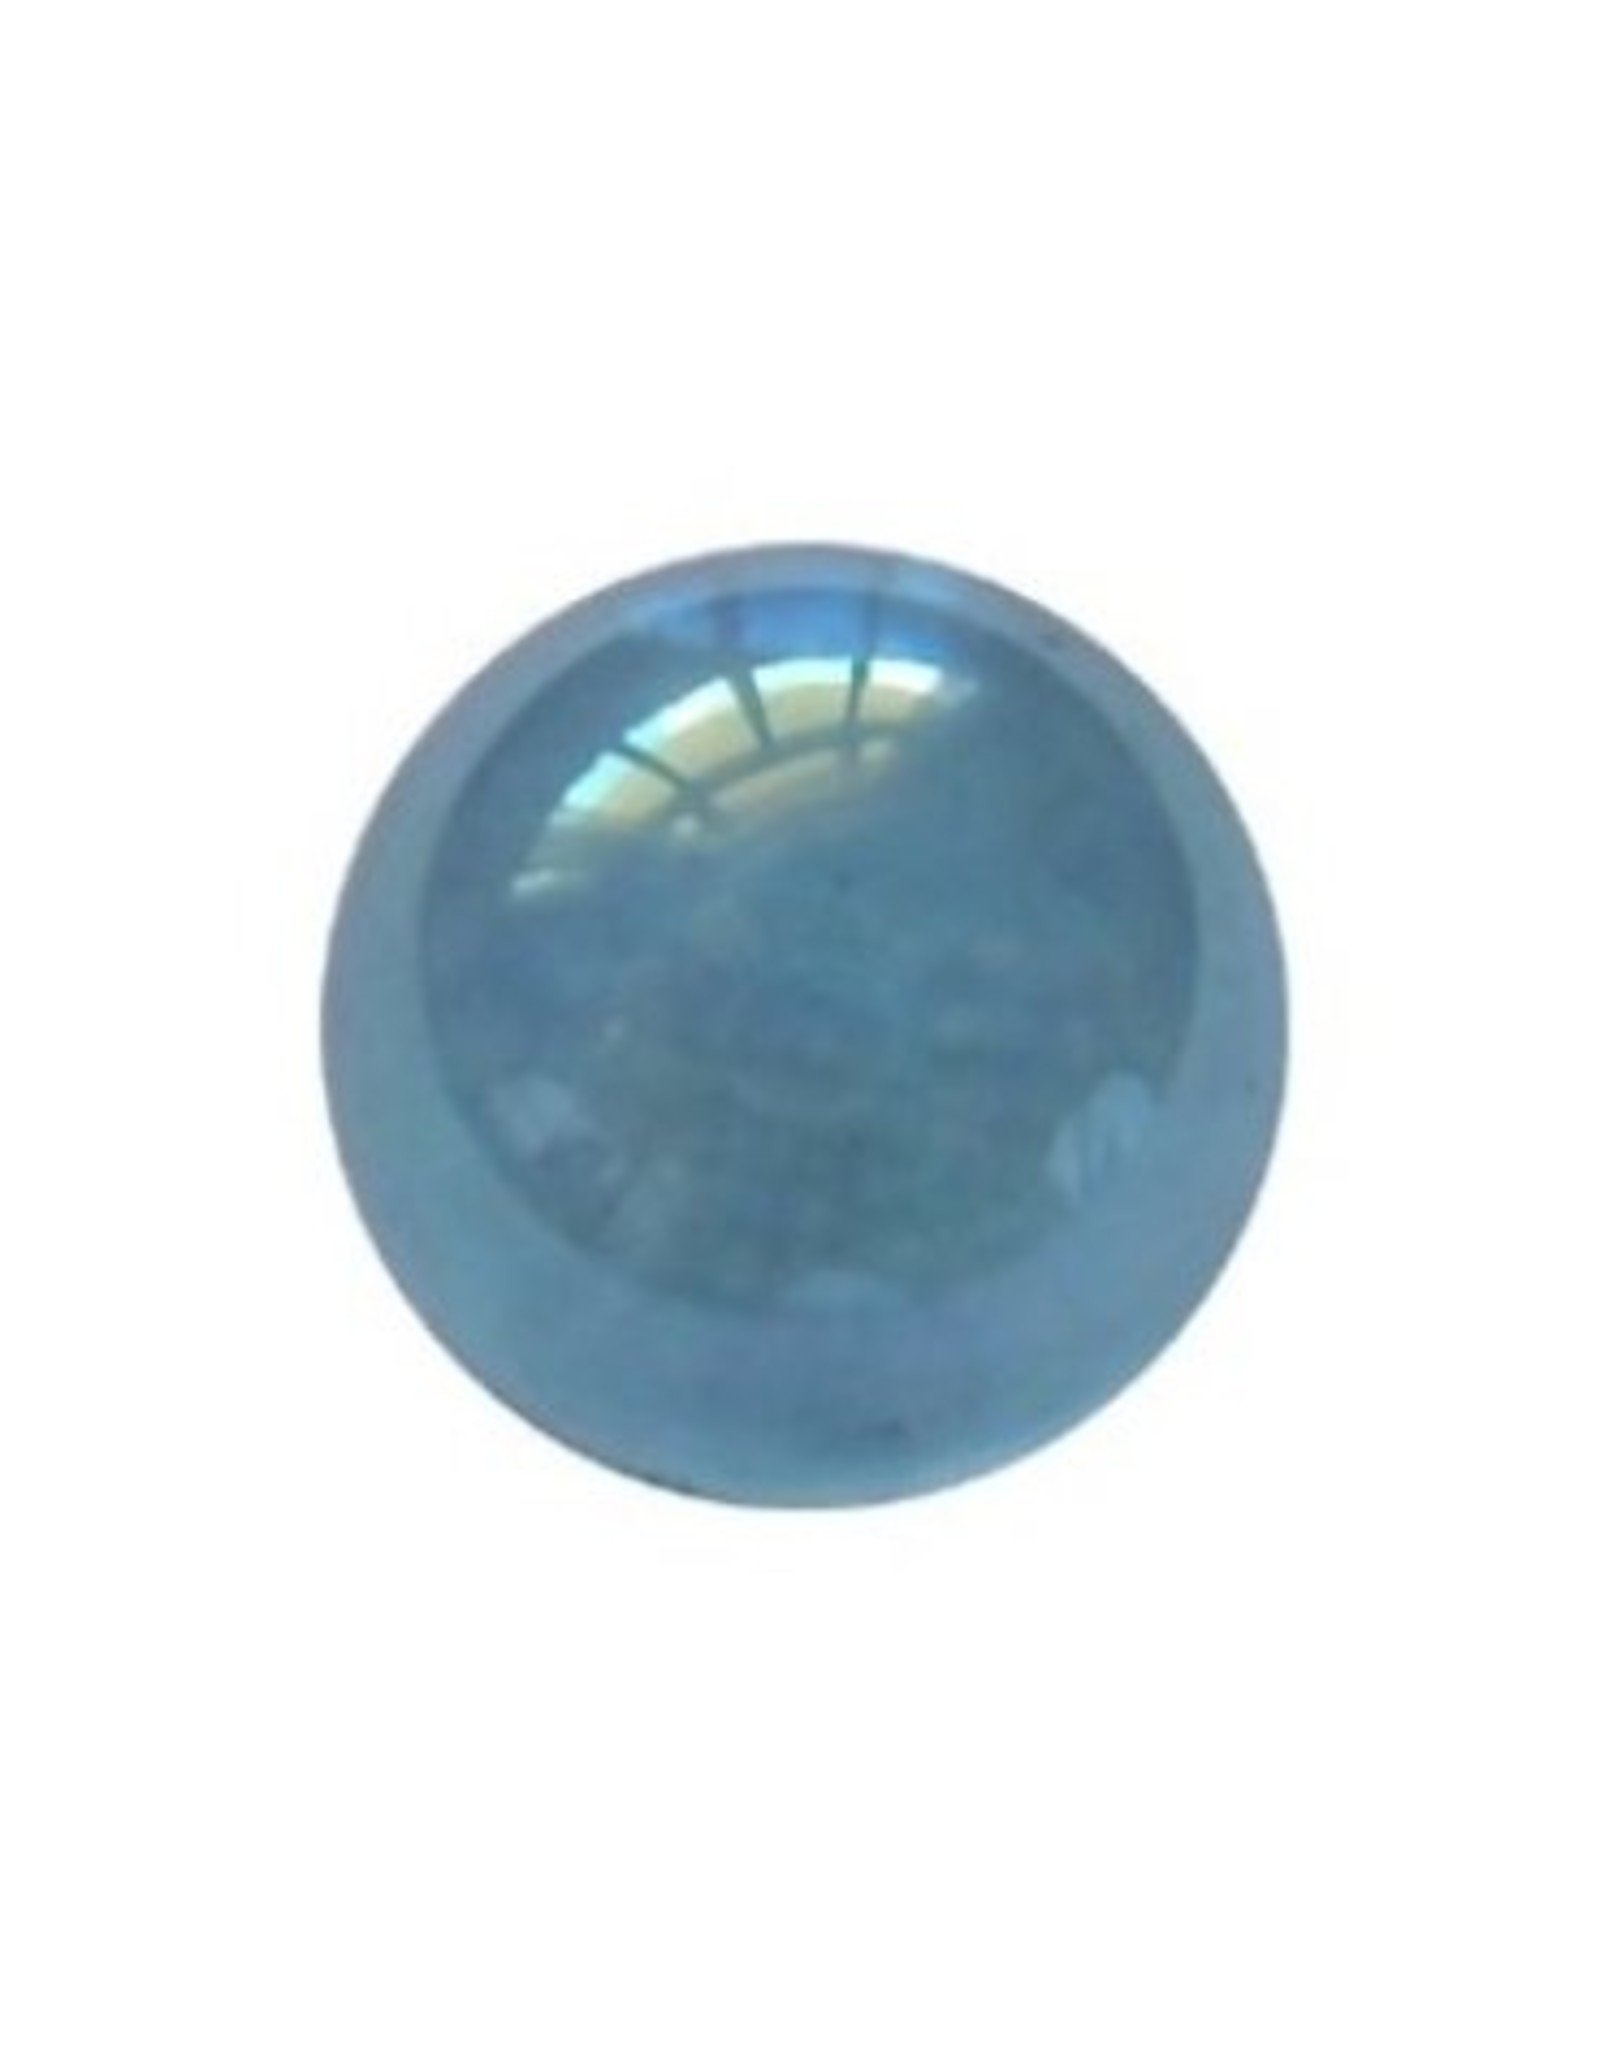 Interchangeable gemstone Aqua Aura 10 mm